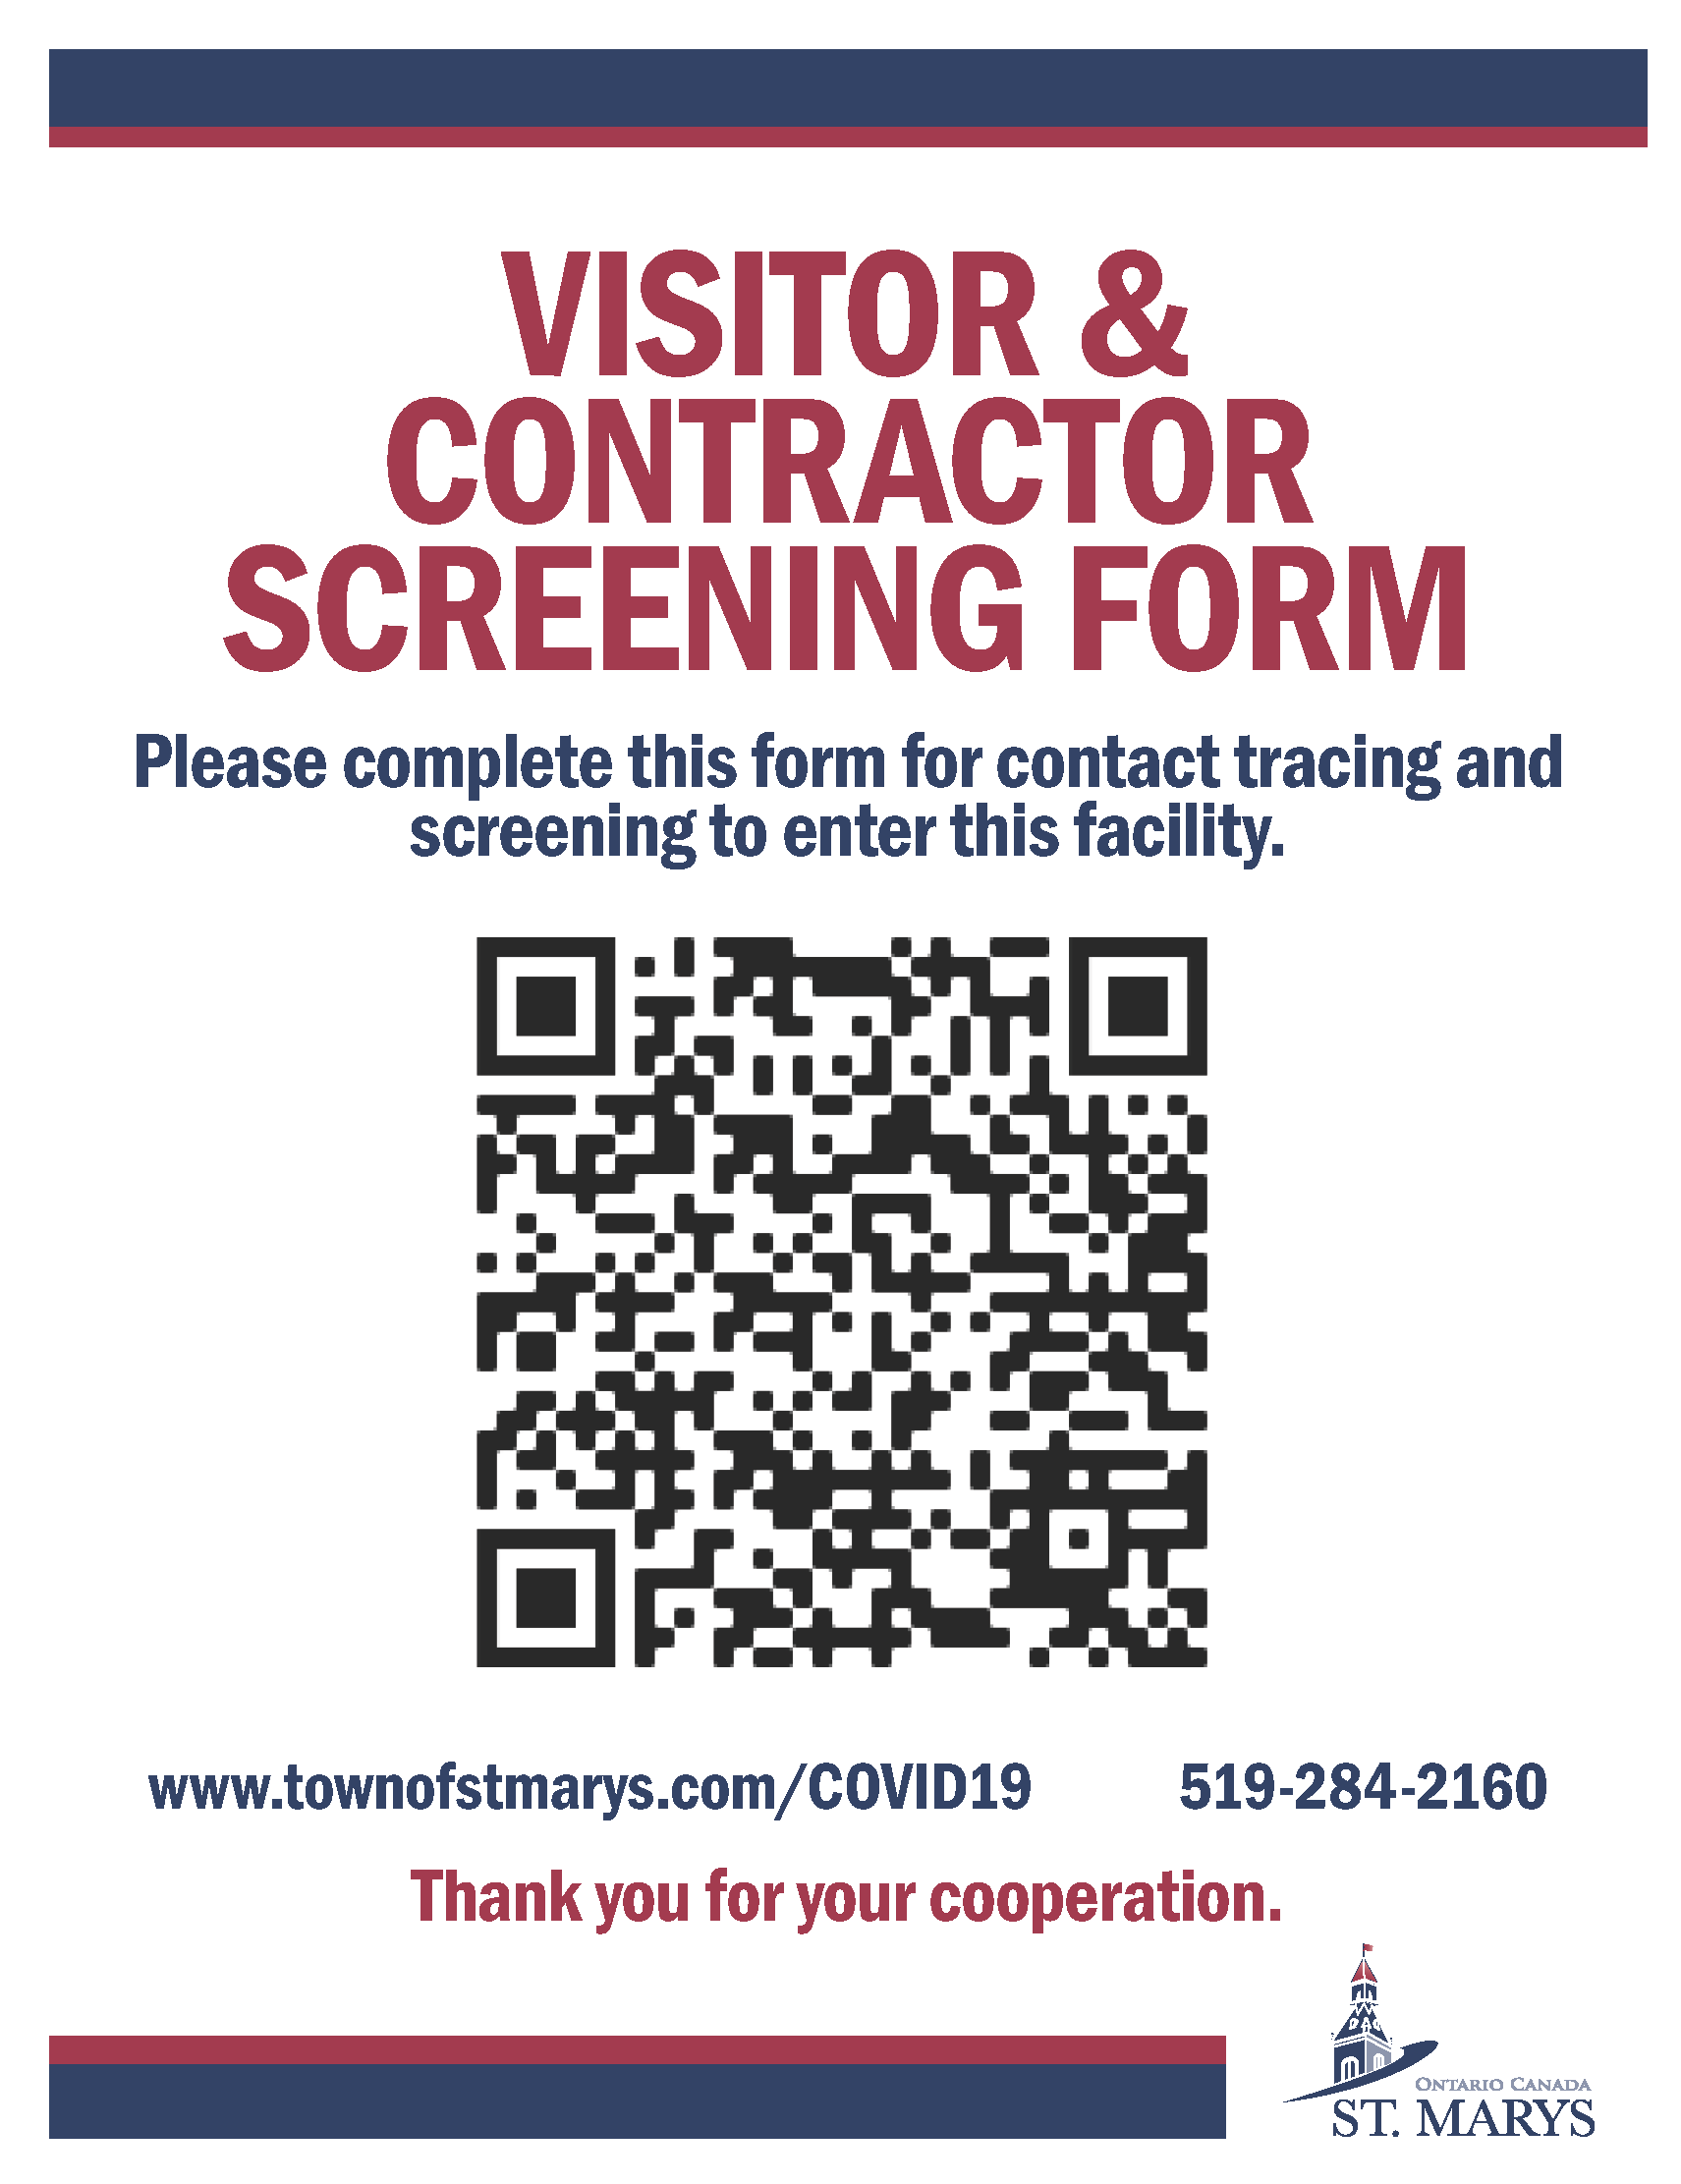 Visitor Screening Form